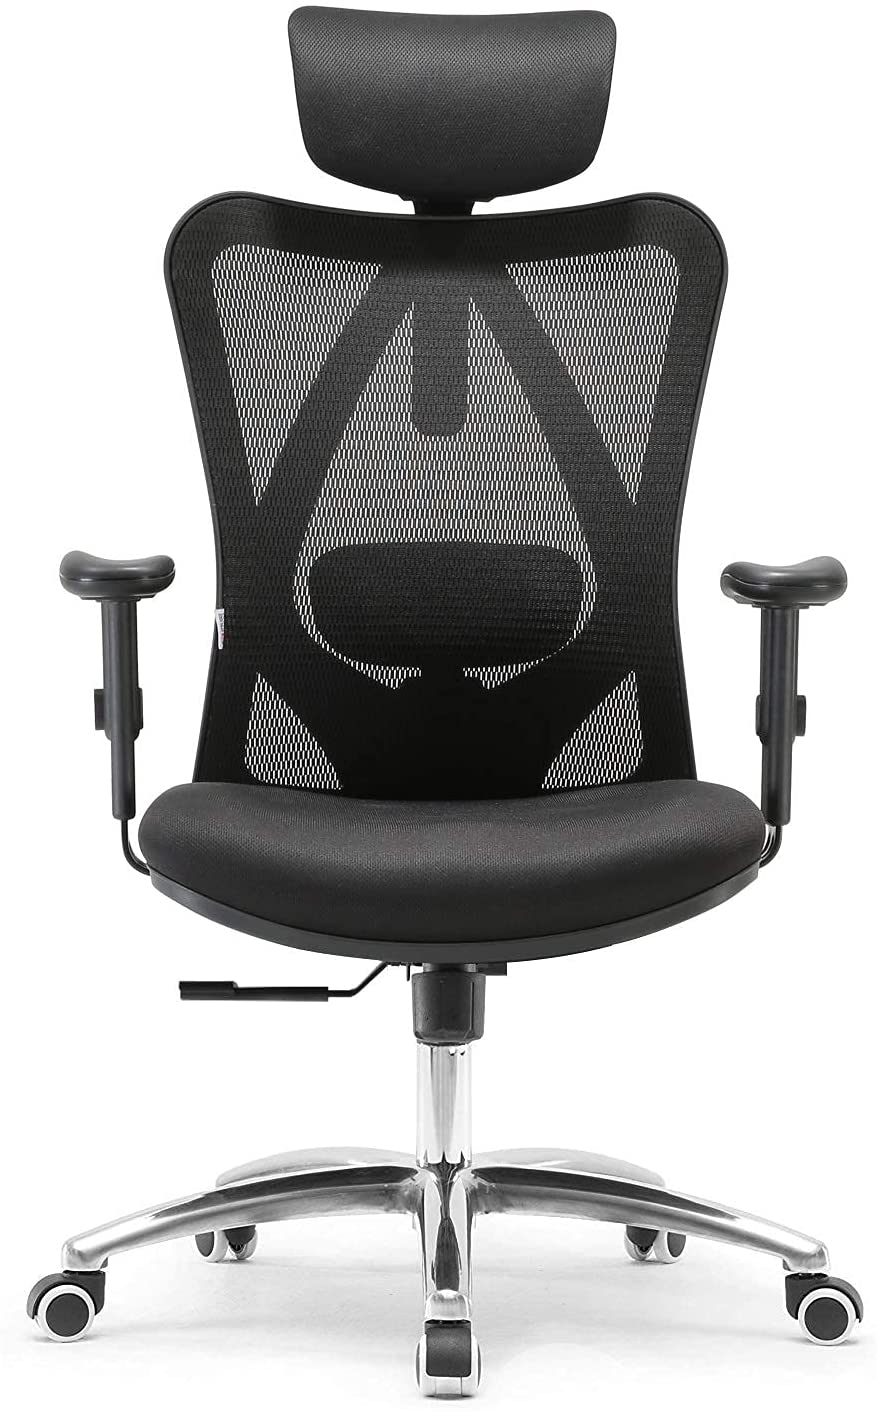 SIHOO Office Desk Chair, Ergonomic Computer Chair